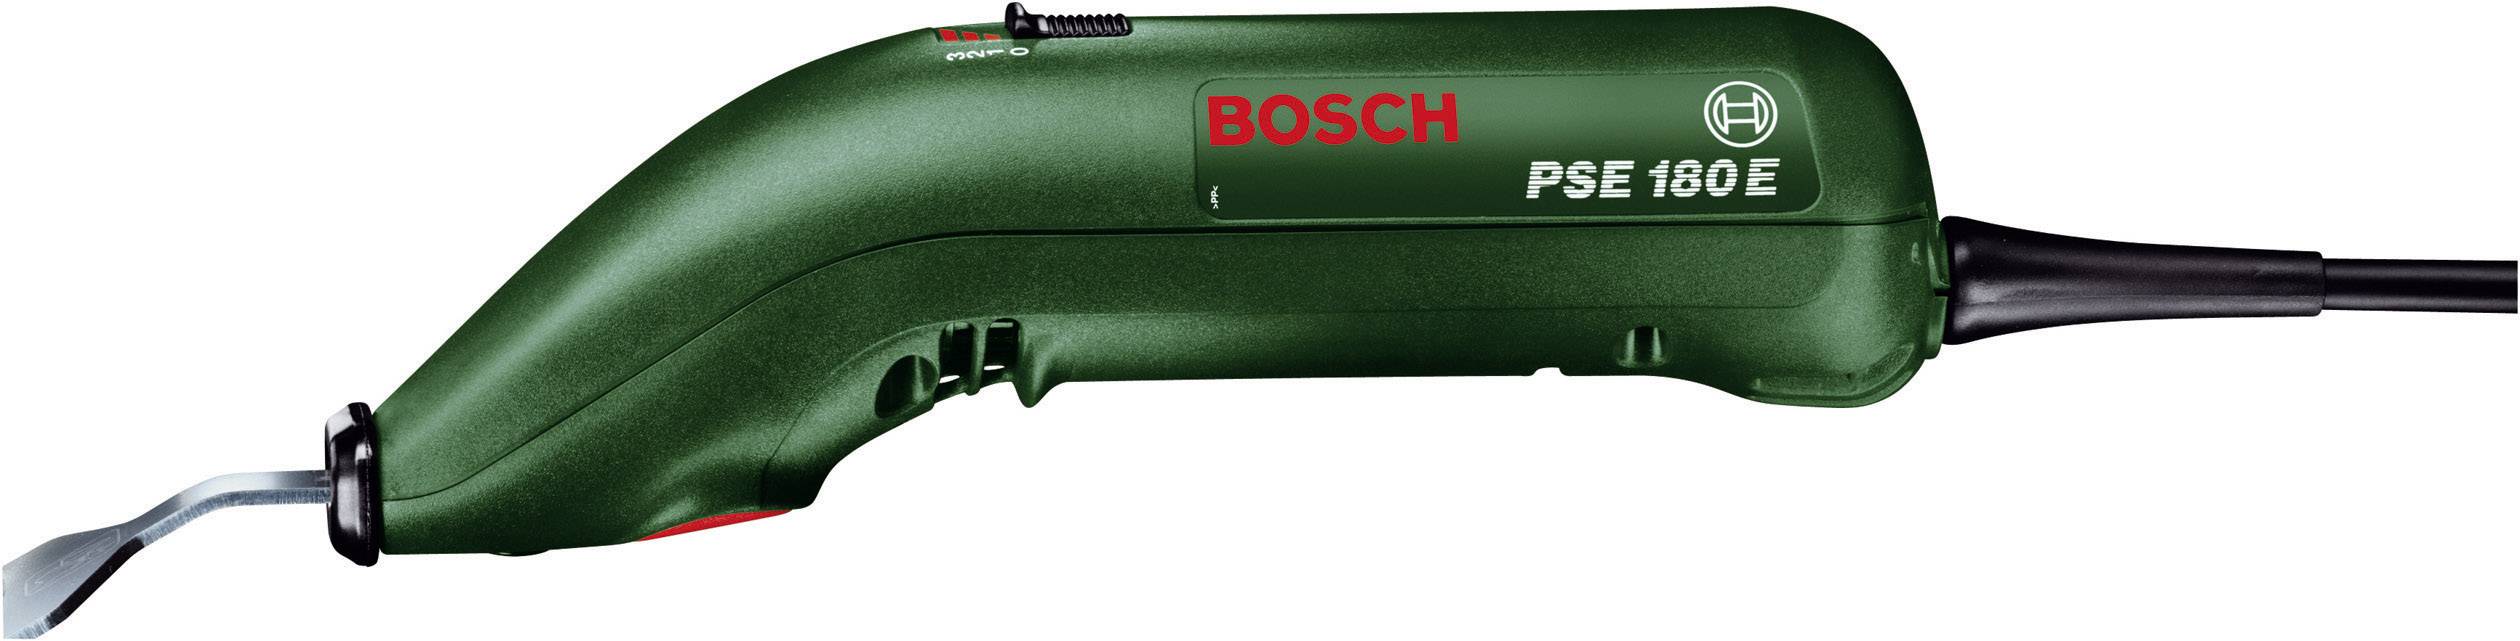 Bosch pse 180 e